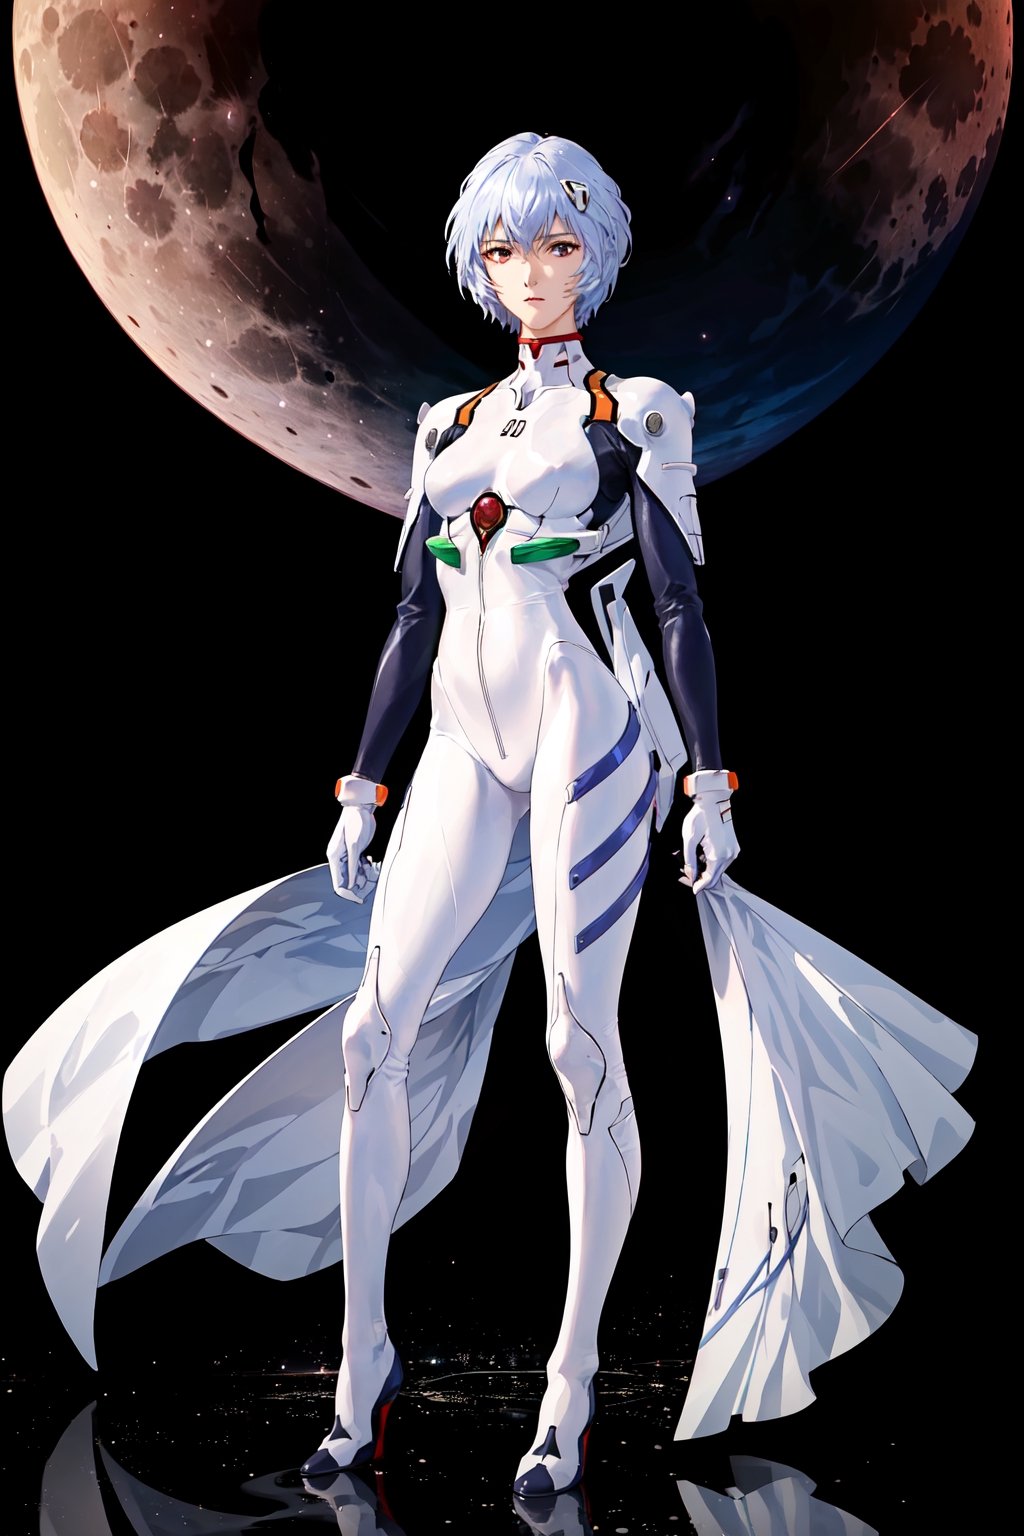 (best qulity), (masterpeice),
girl dynamic pose, white bodysuit, shoulder armor,
dramatic lighting,ayanamirei, fullmoon, realistic 